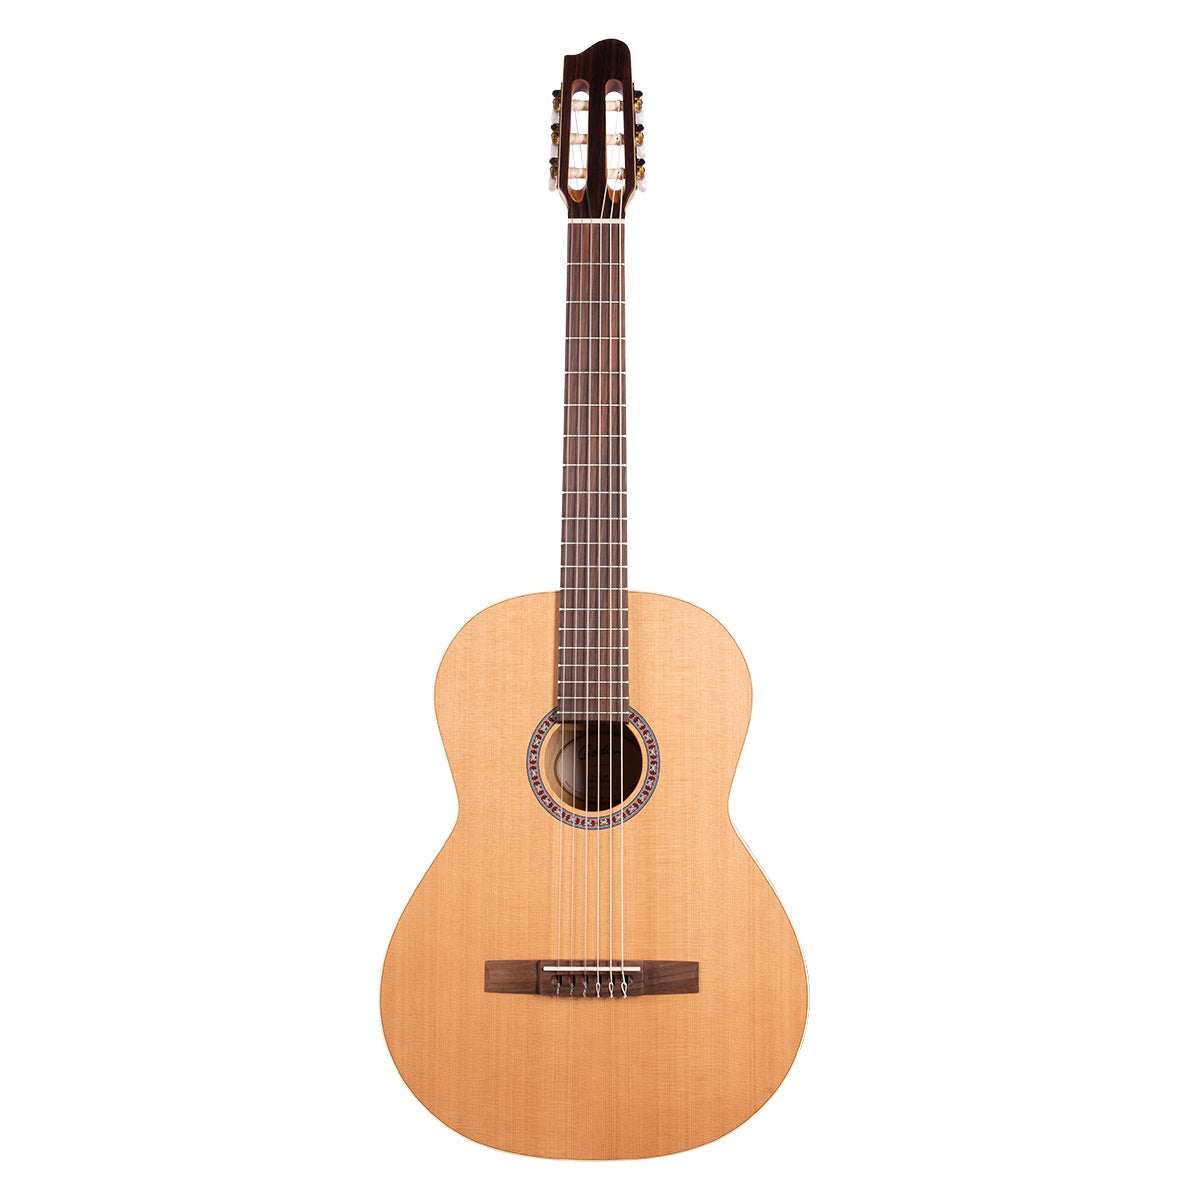 Godin Etude Nylon String Guitar ~ Left Hand, Acoustic Guitar for sale at Richards Guitars.